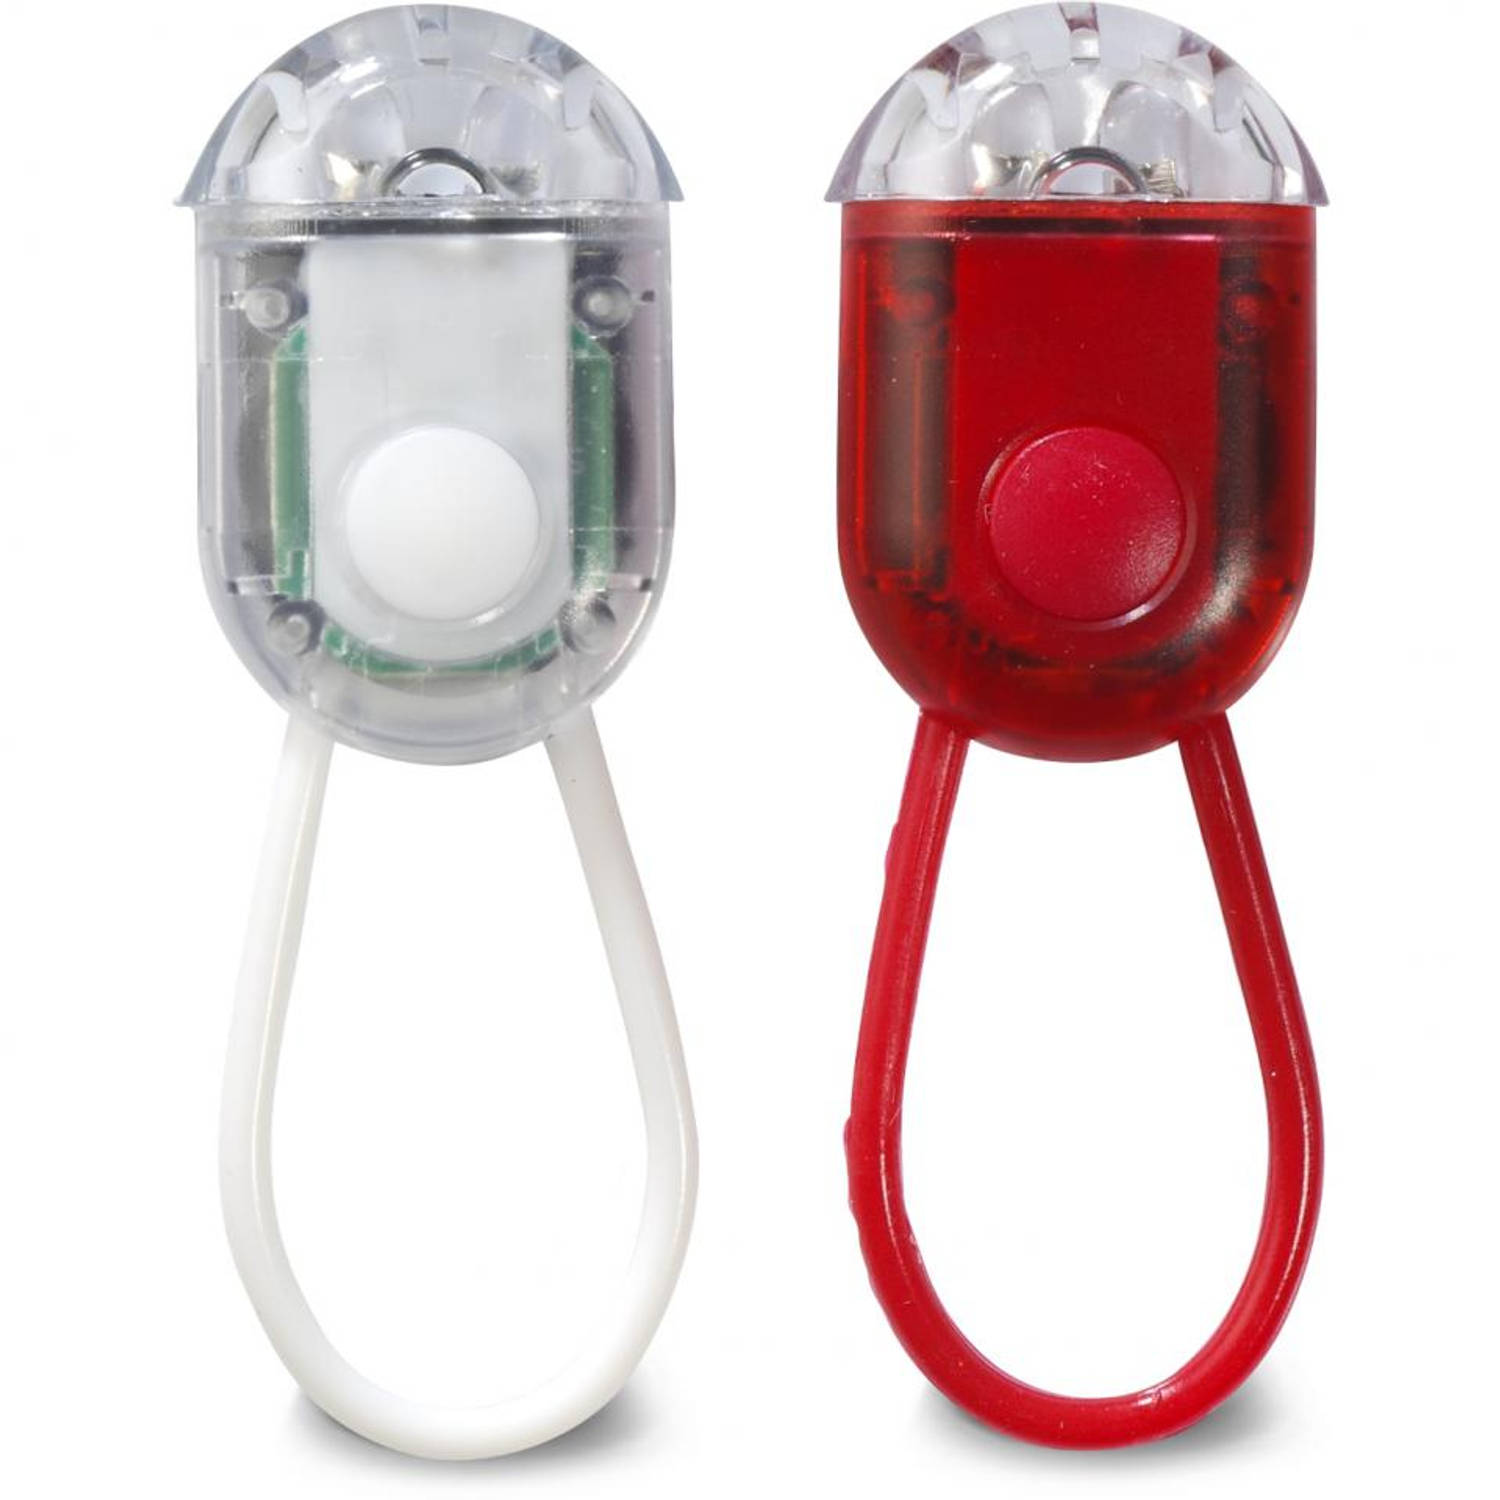 Blokker LED fietslampen transparant